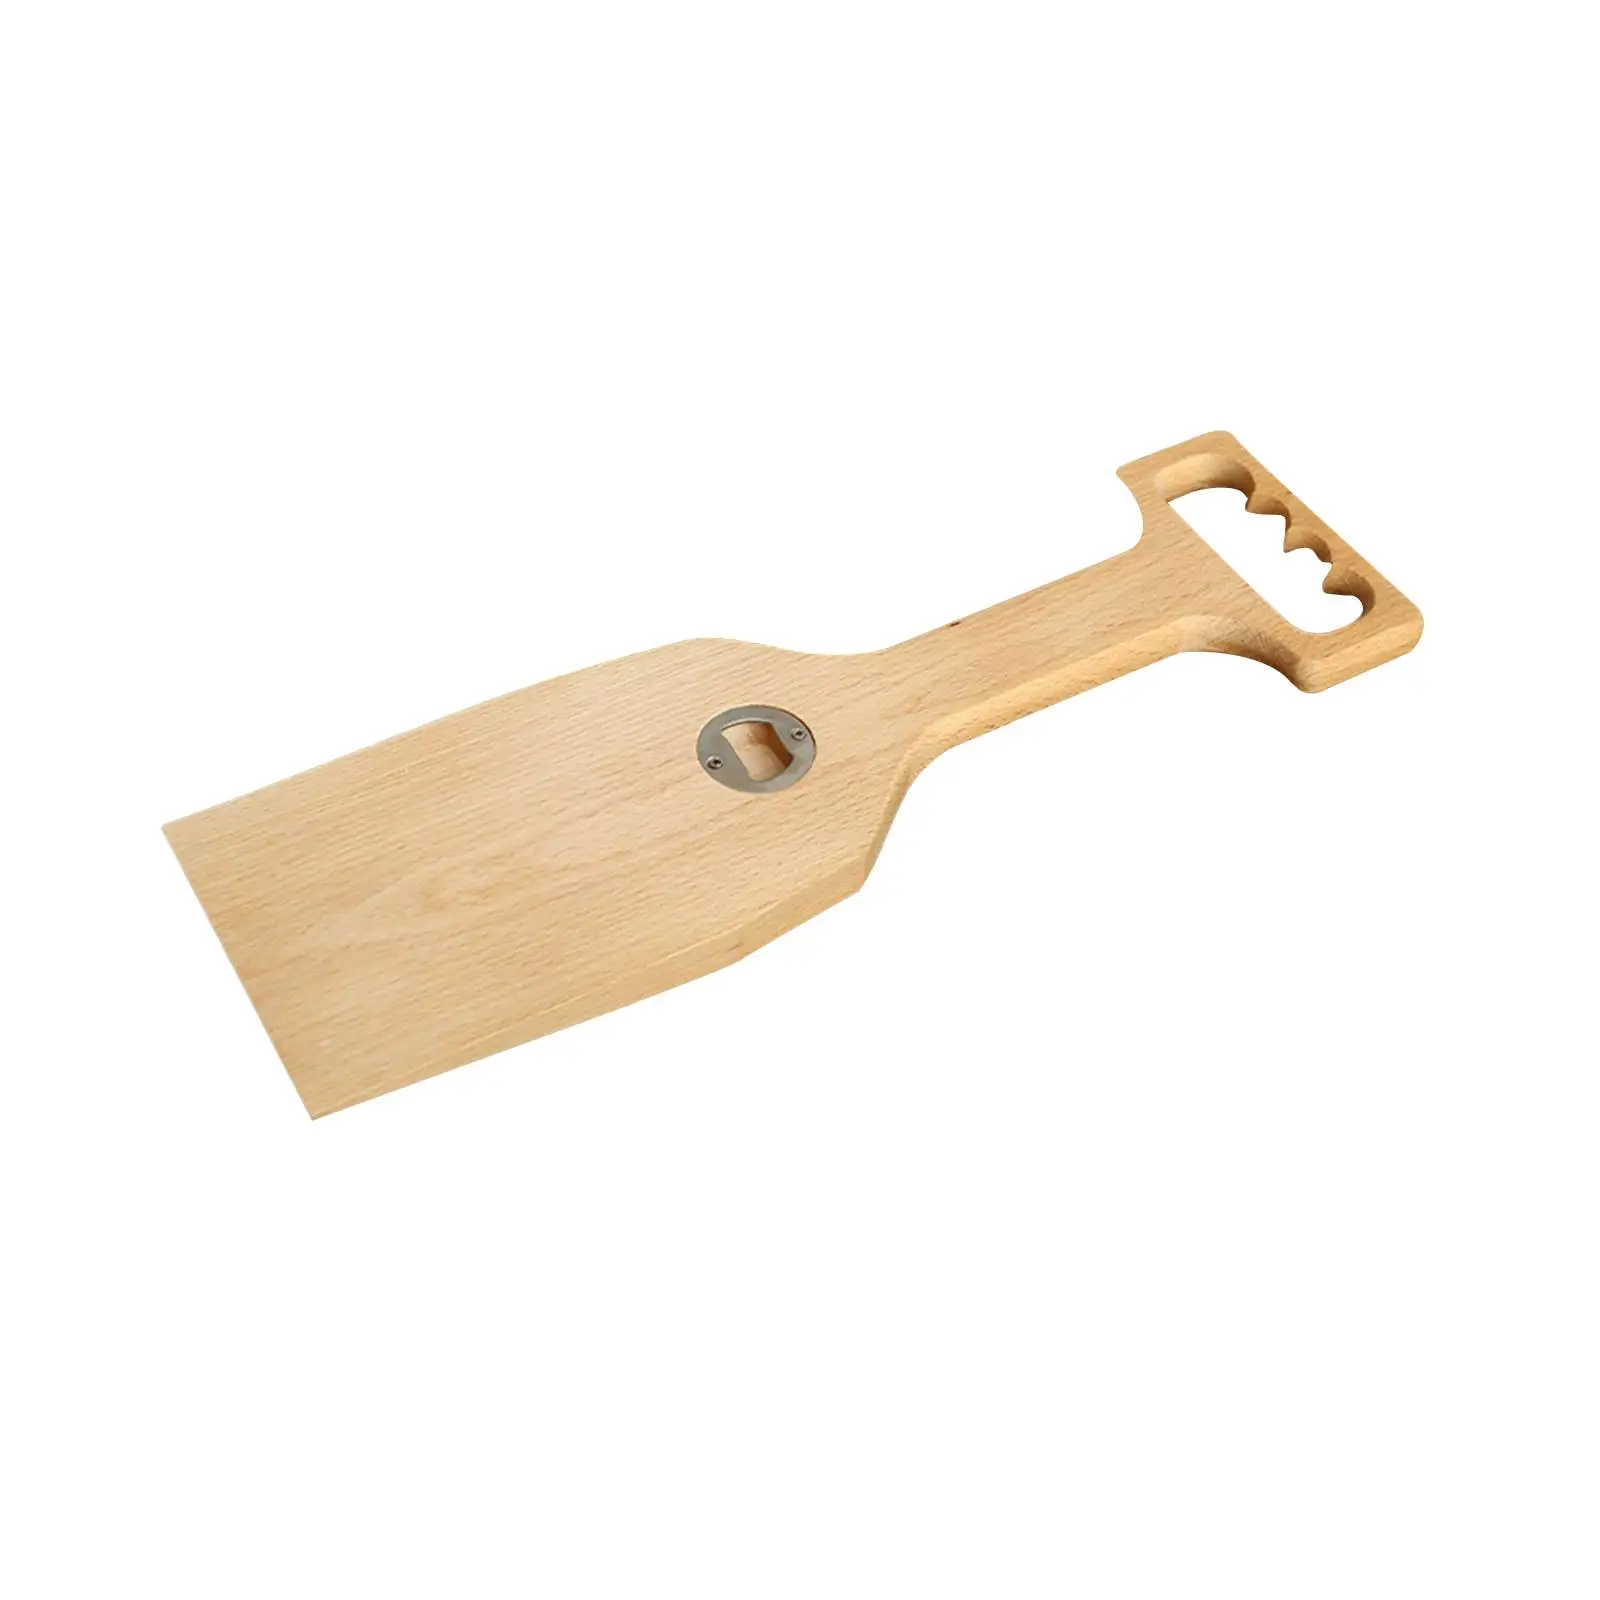 Wood Scraper Shovel Utensils Cleaning Scraper for Turning Serving Fitments